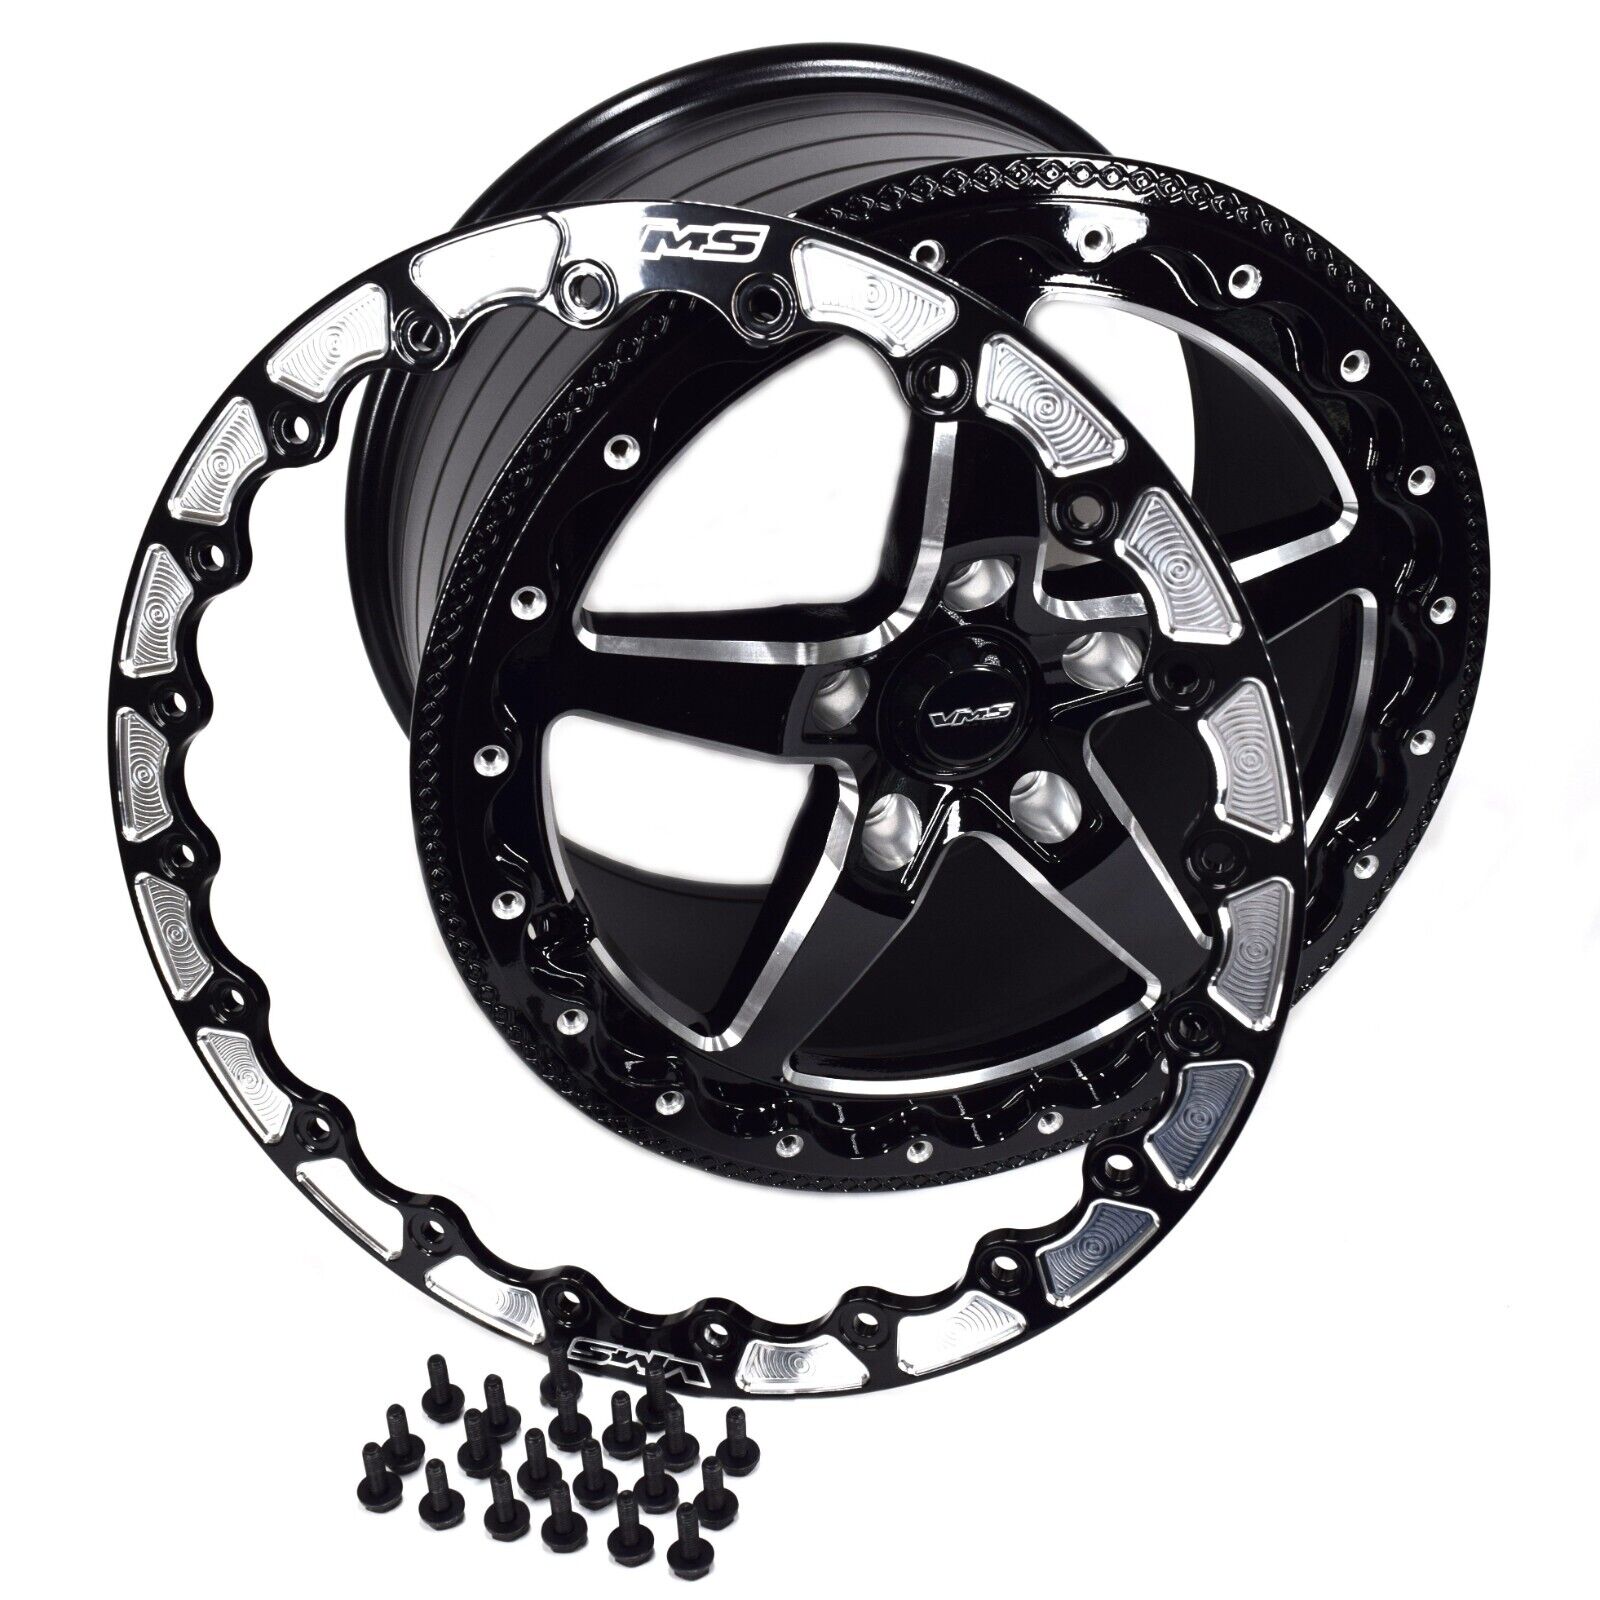 VMS Racing Black Beadlock Vstar Rim Wheel 17x10 5X120 +44 For 10-20 Chevy Camaro